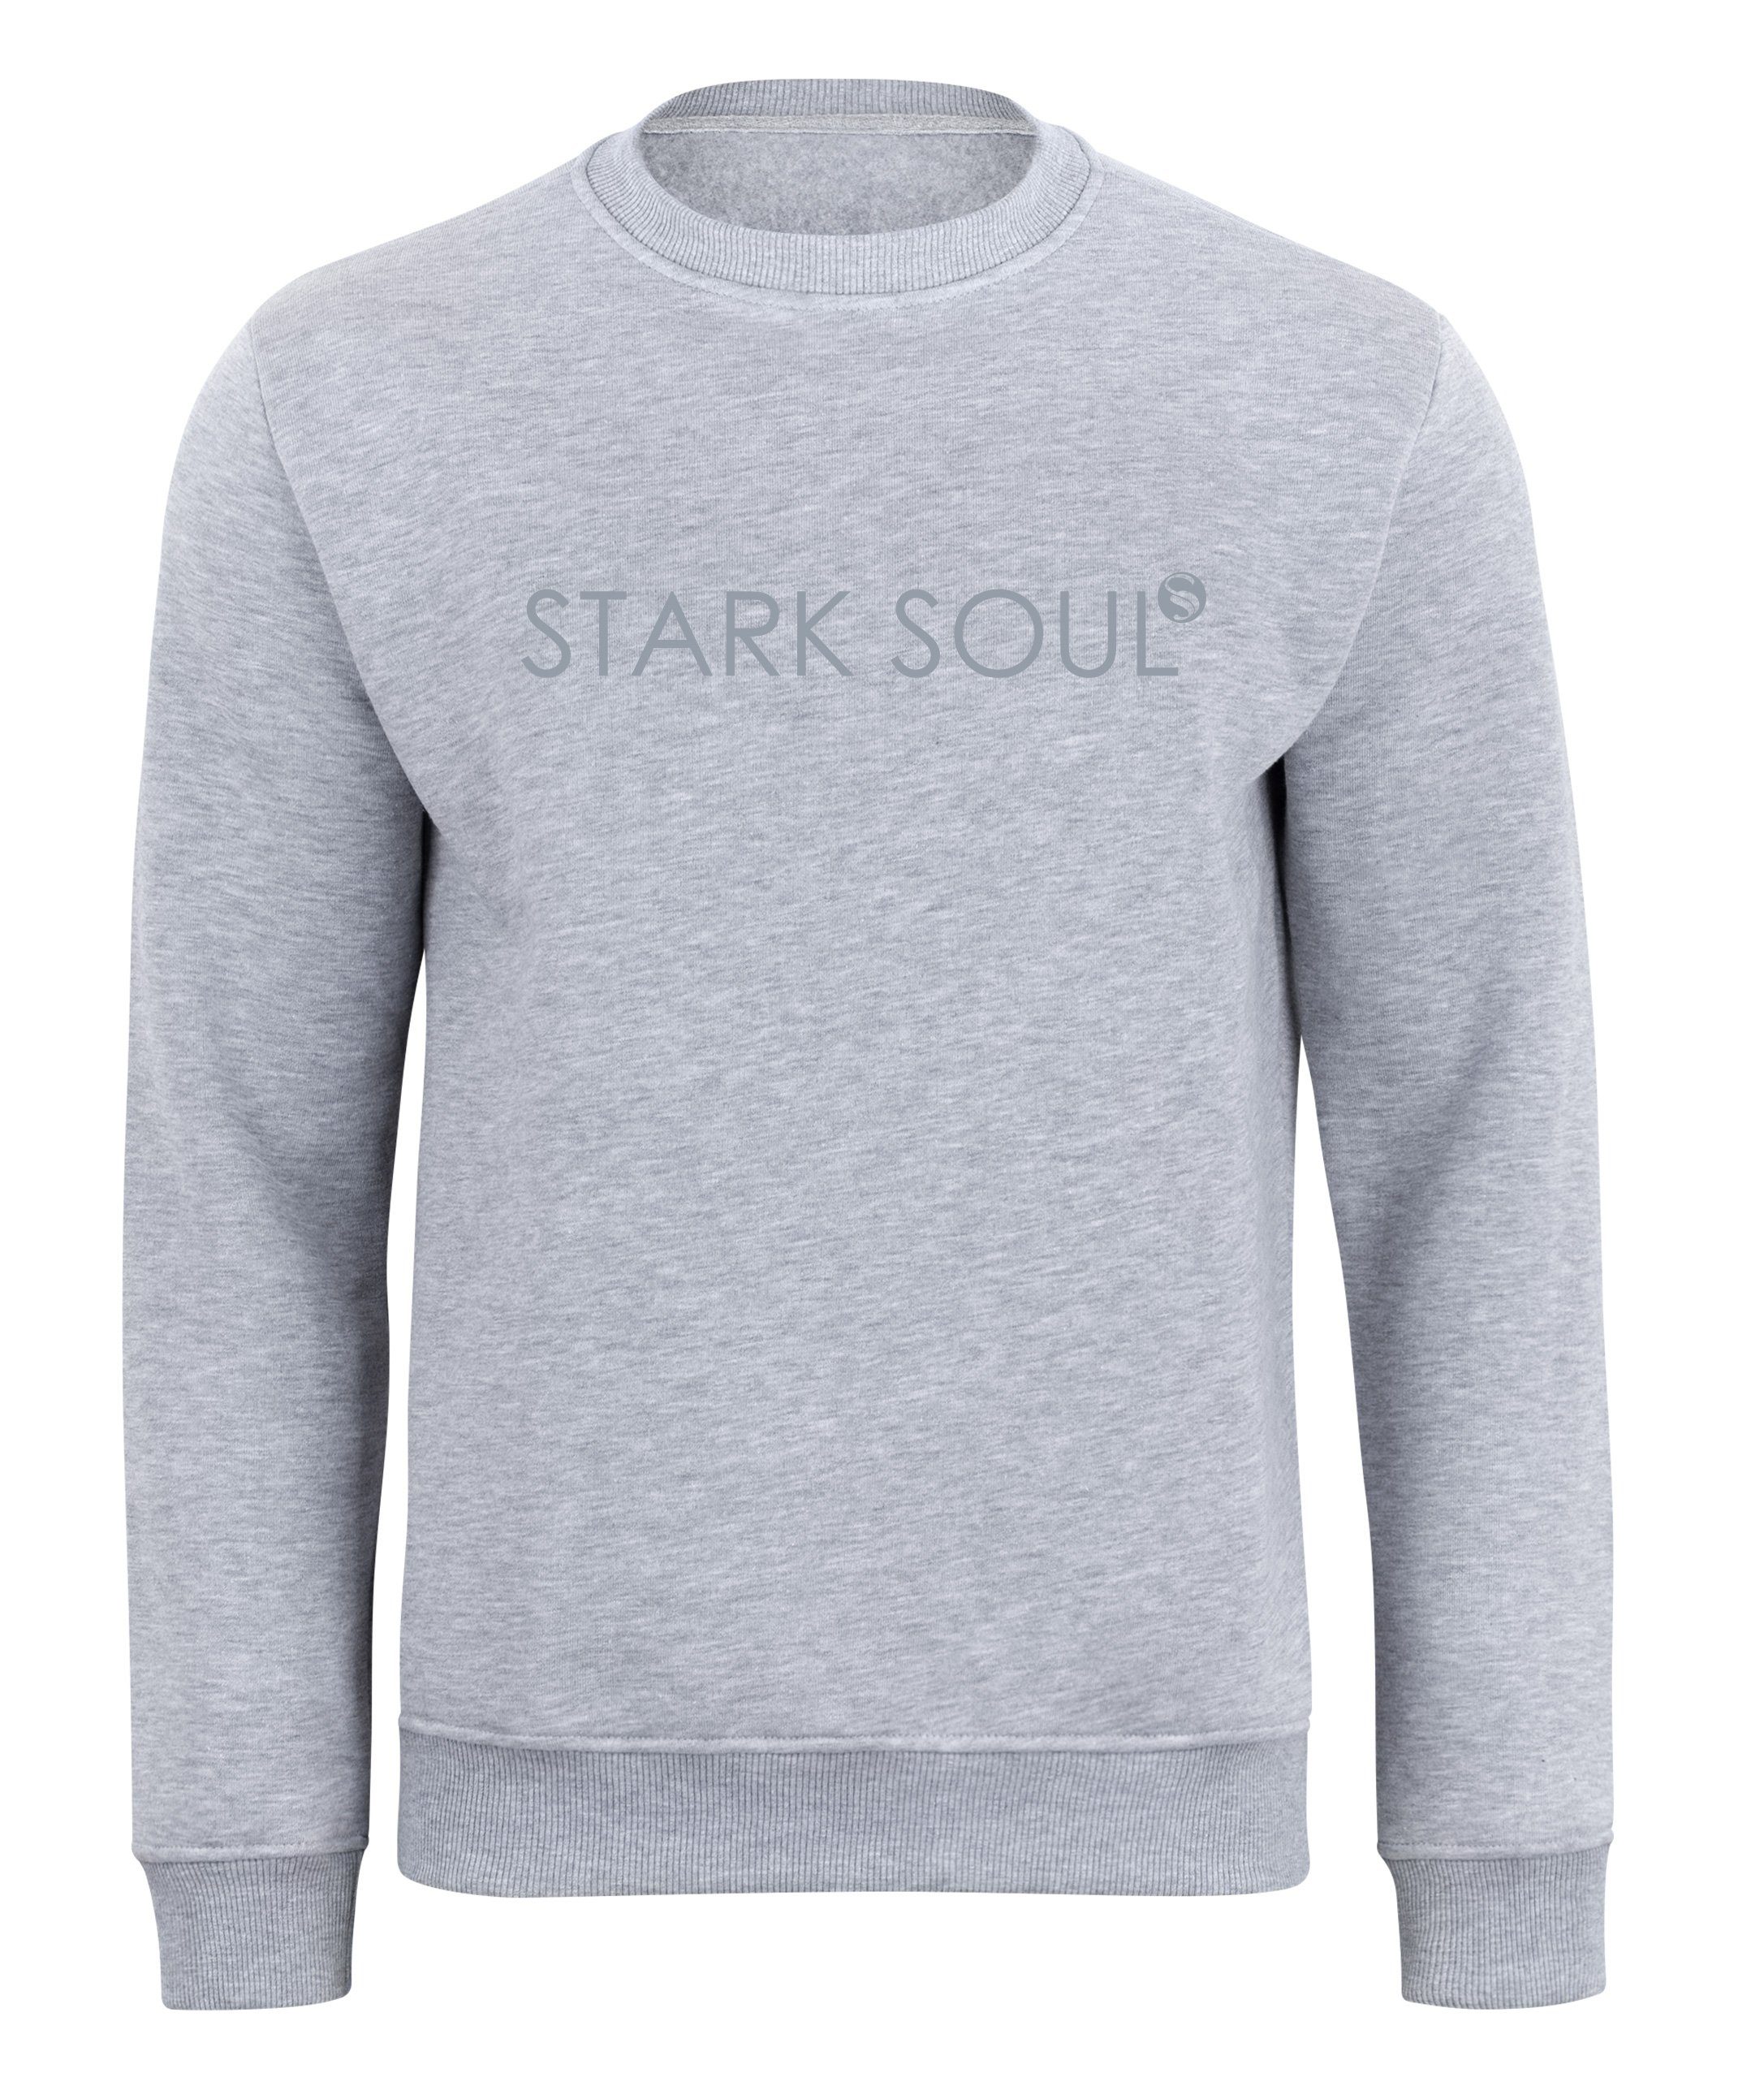 Stark Soul® Sweatshirt French-Terry-Rundhals-Sweatshirt, Innen angeraut mit Logoprint Grau-Melange